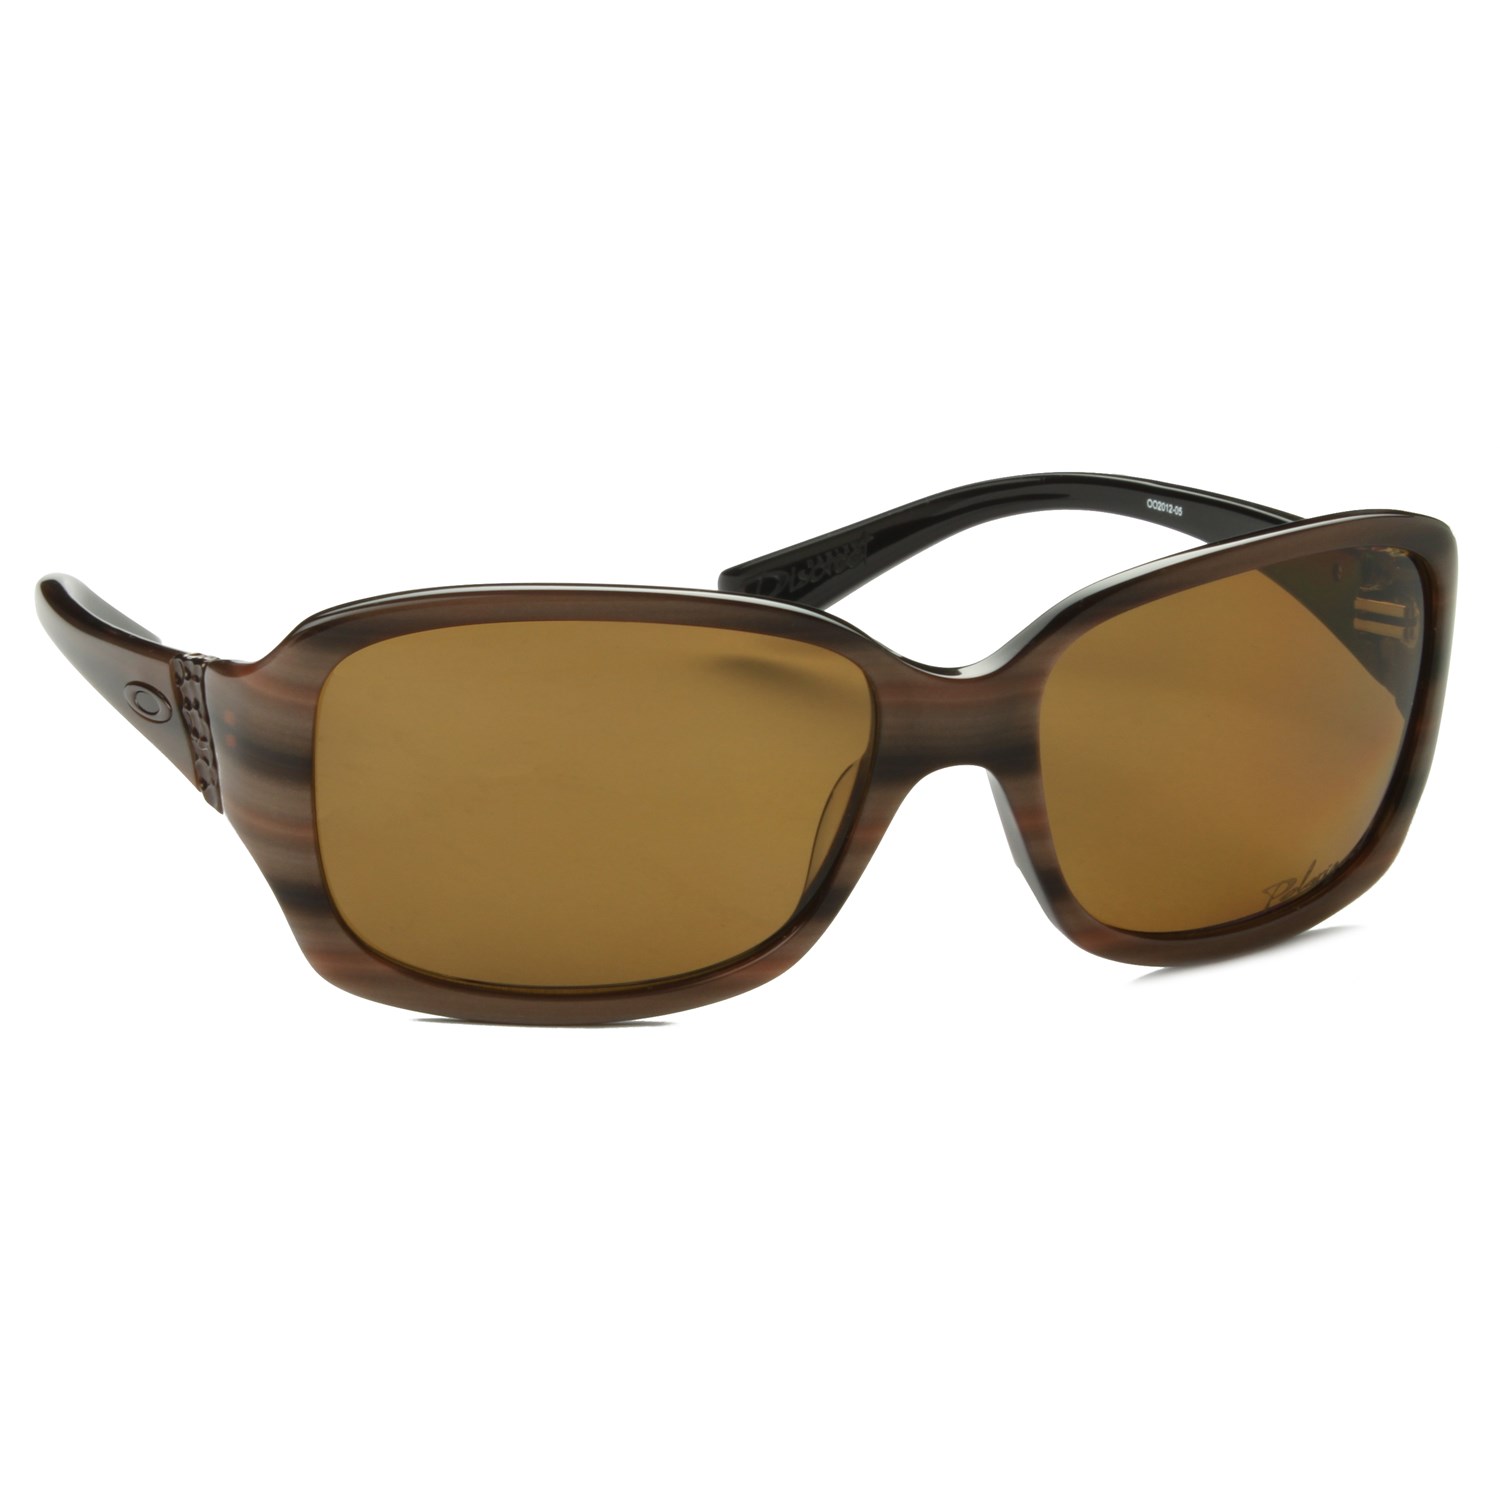 Oakley Discreet Sunglasses - Women's | evo